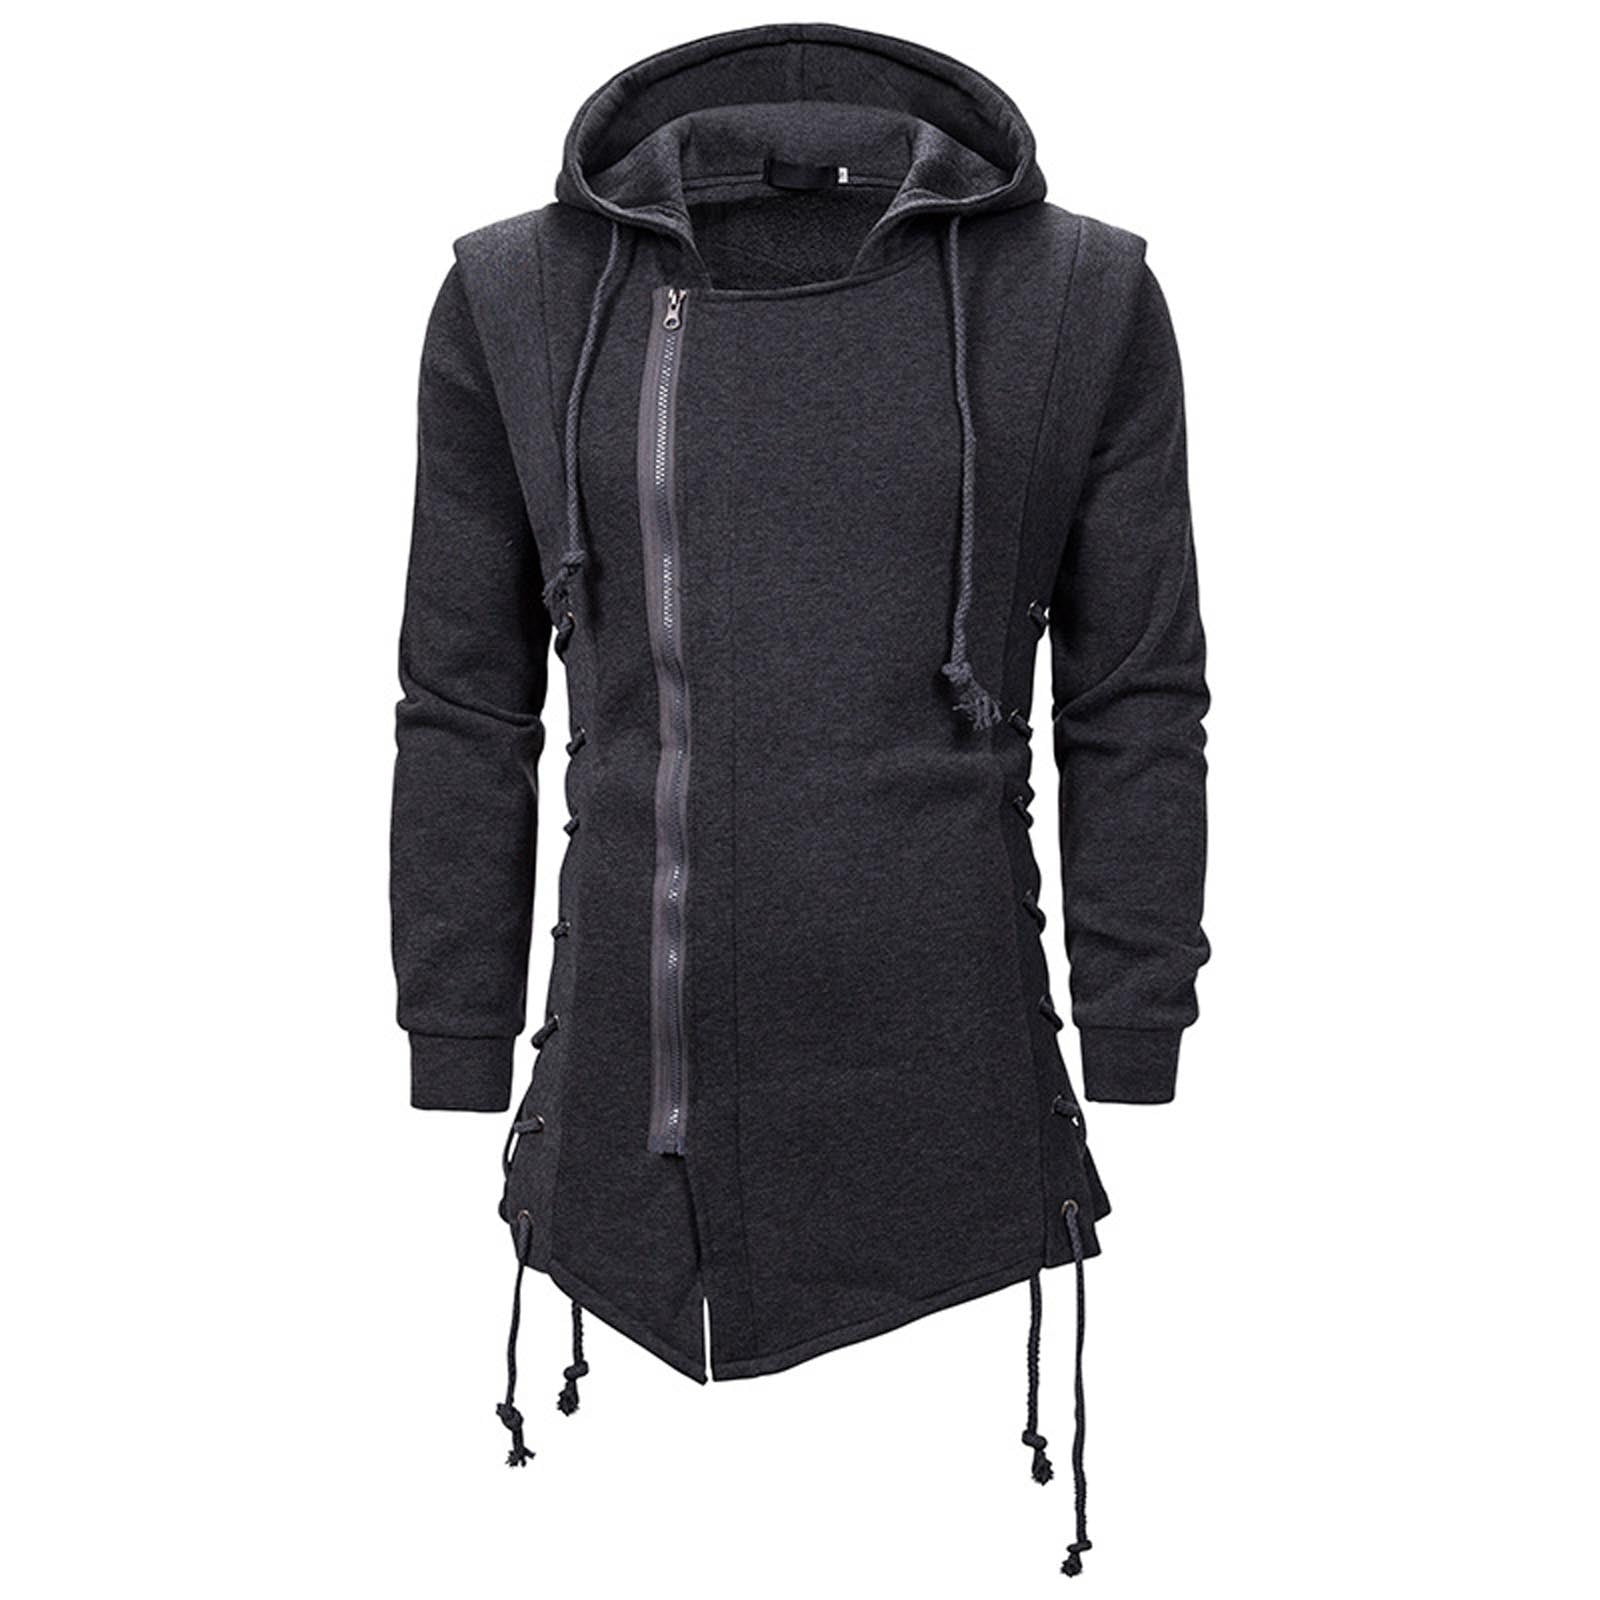 Men Gothic Zipper Hoodies,Fashion Side Lace Up Fleece Assassins Creed Hooded Sweatshirt Jacket Loose Halloween Outwear 